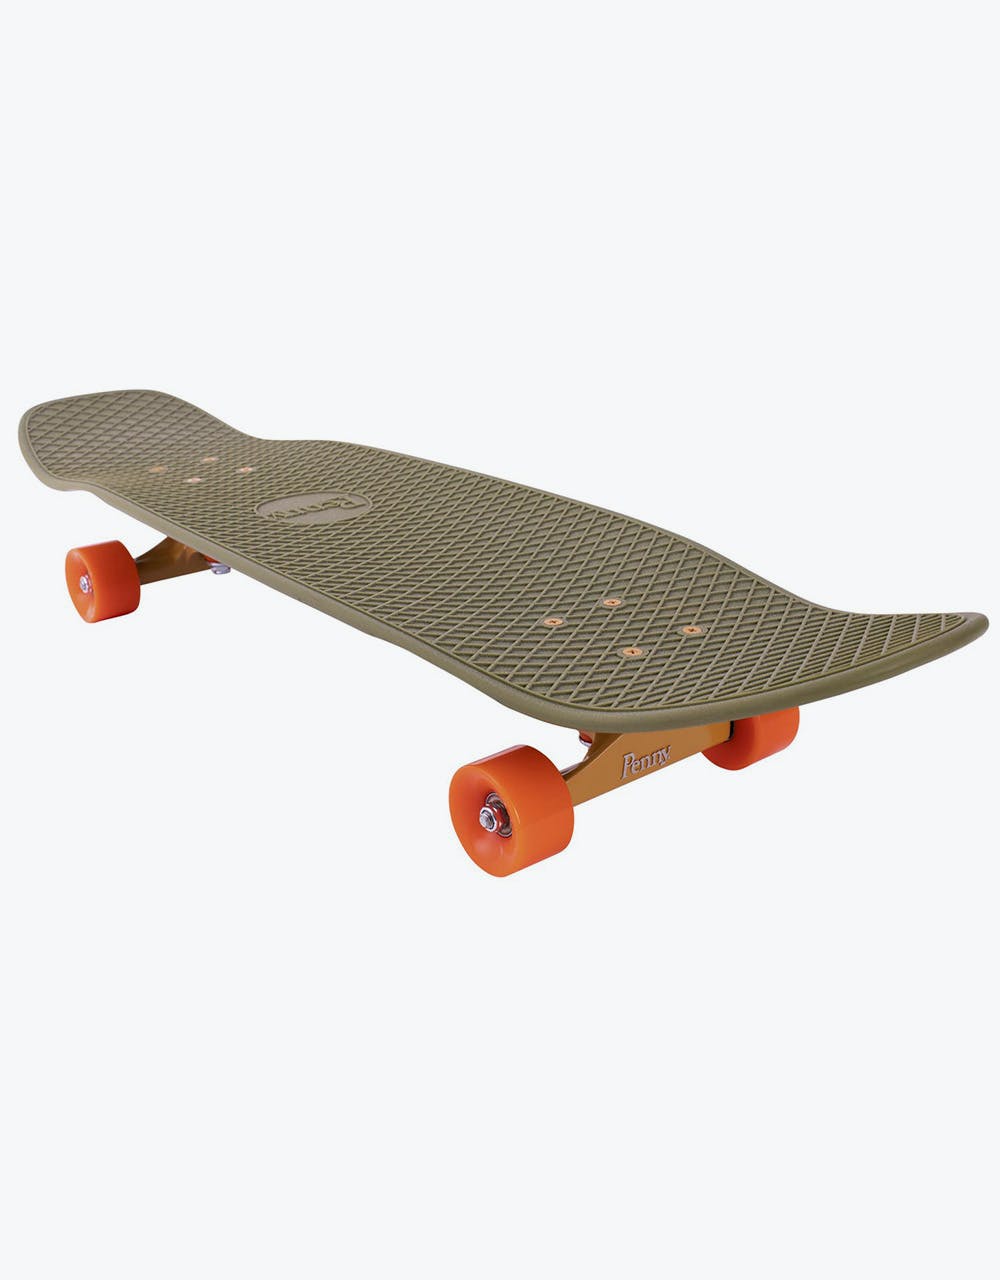 Penny Skateboards Classic Cruiser - 32" - Burnt Olive